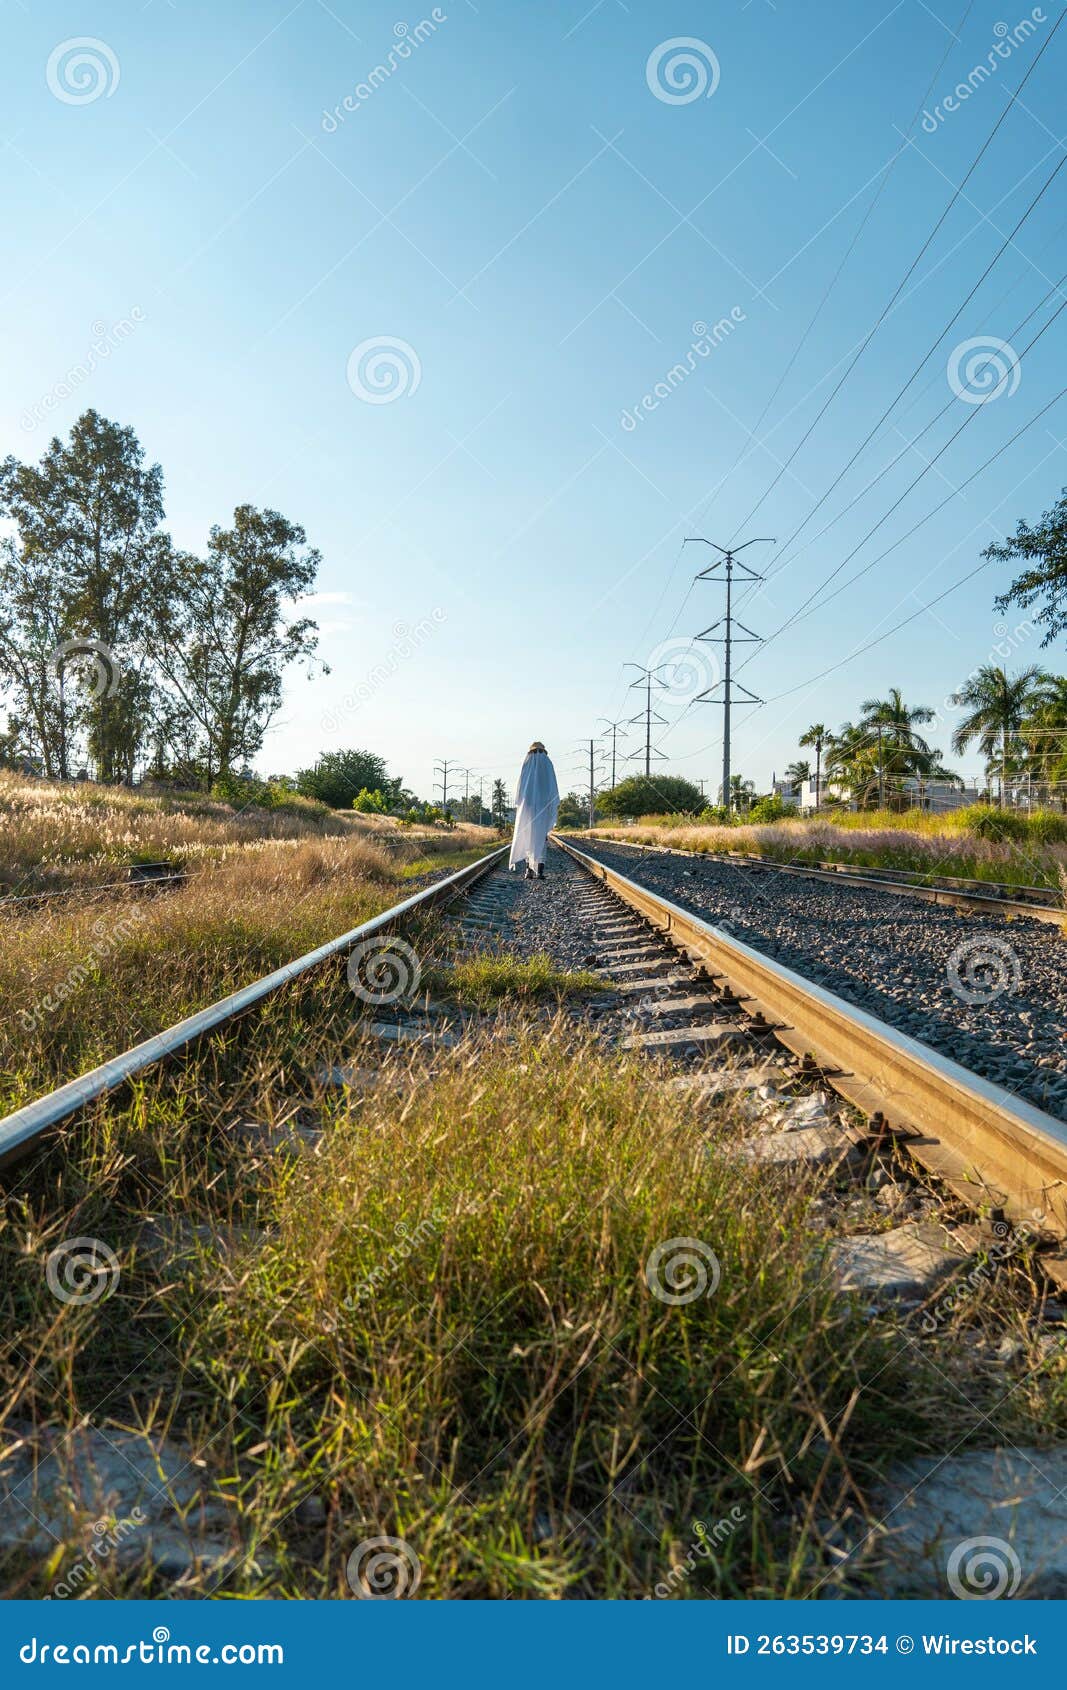 Man Crouching on Train Rails · Free Stock Photo